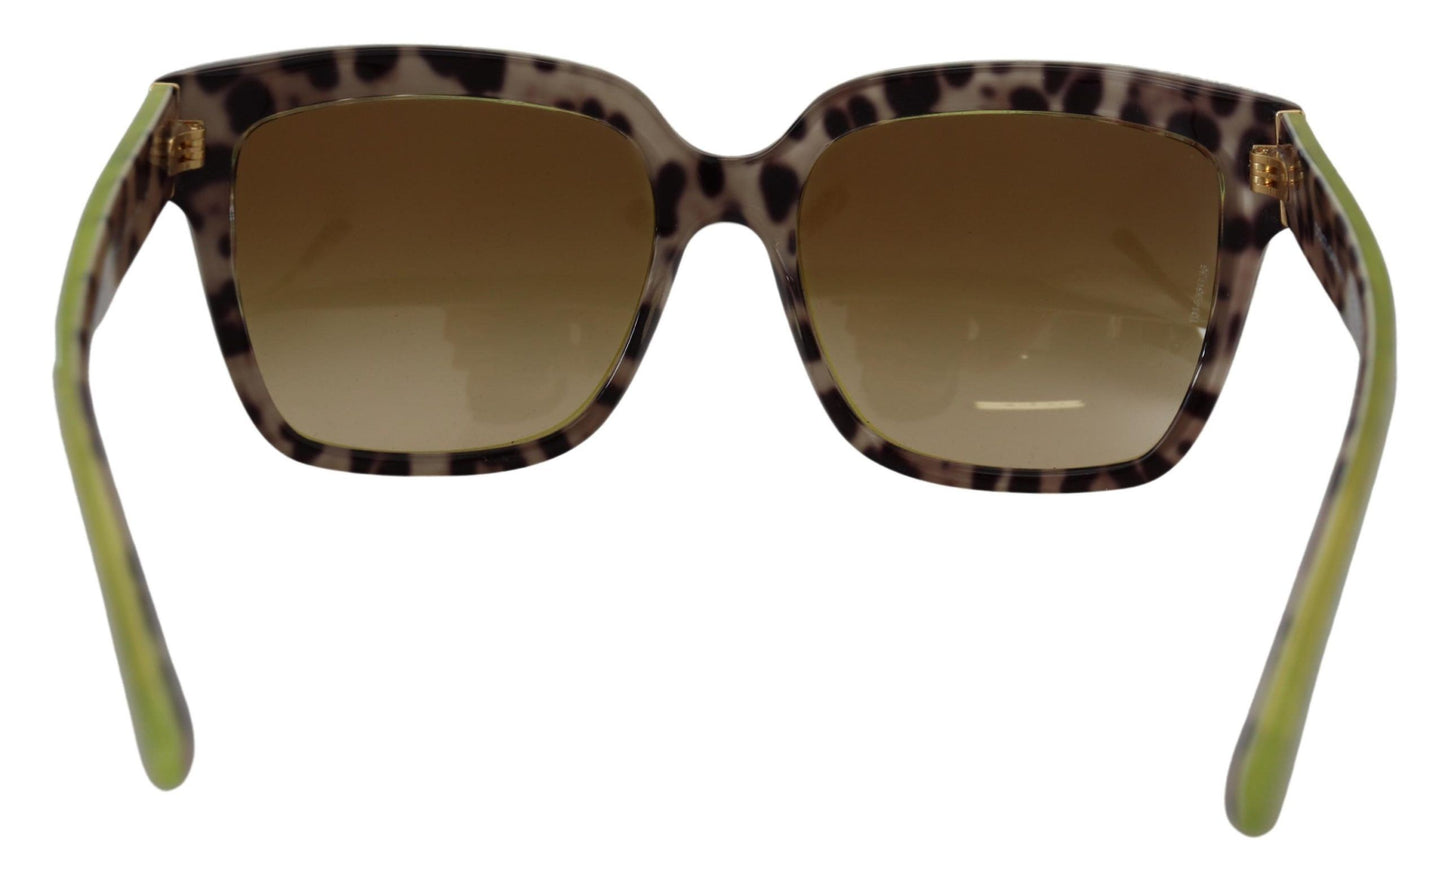 Chic Leopard Acetate Sunglasses